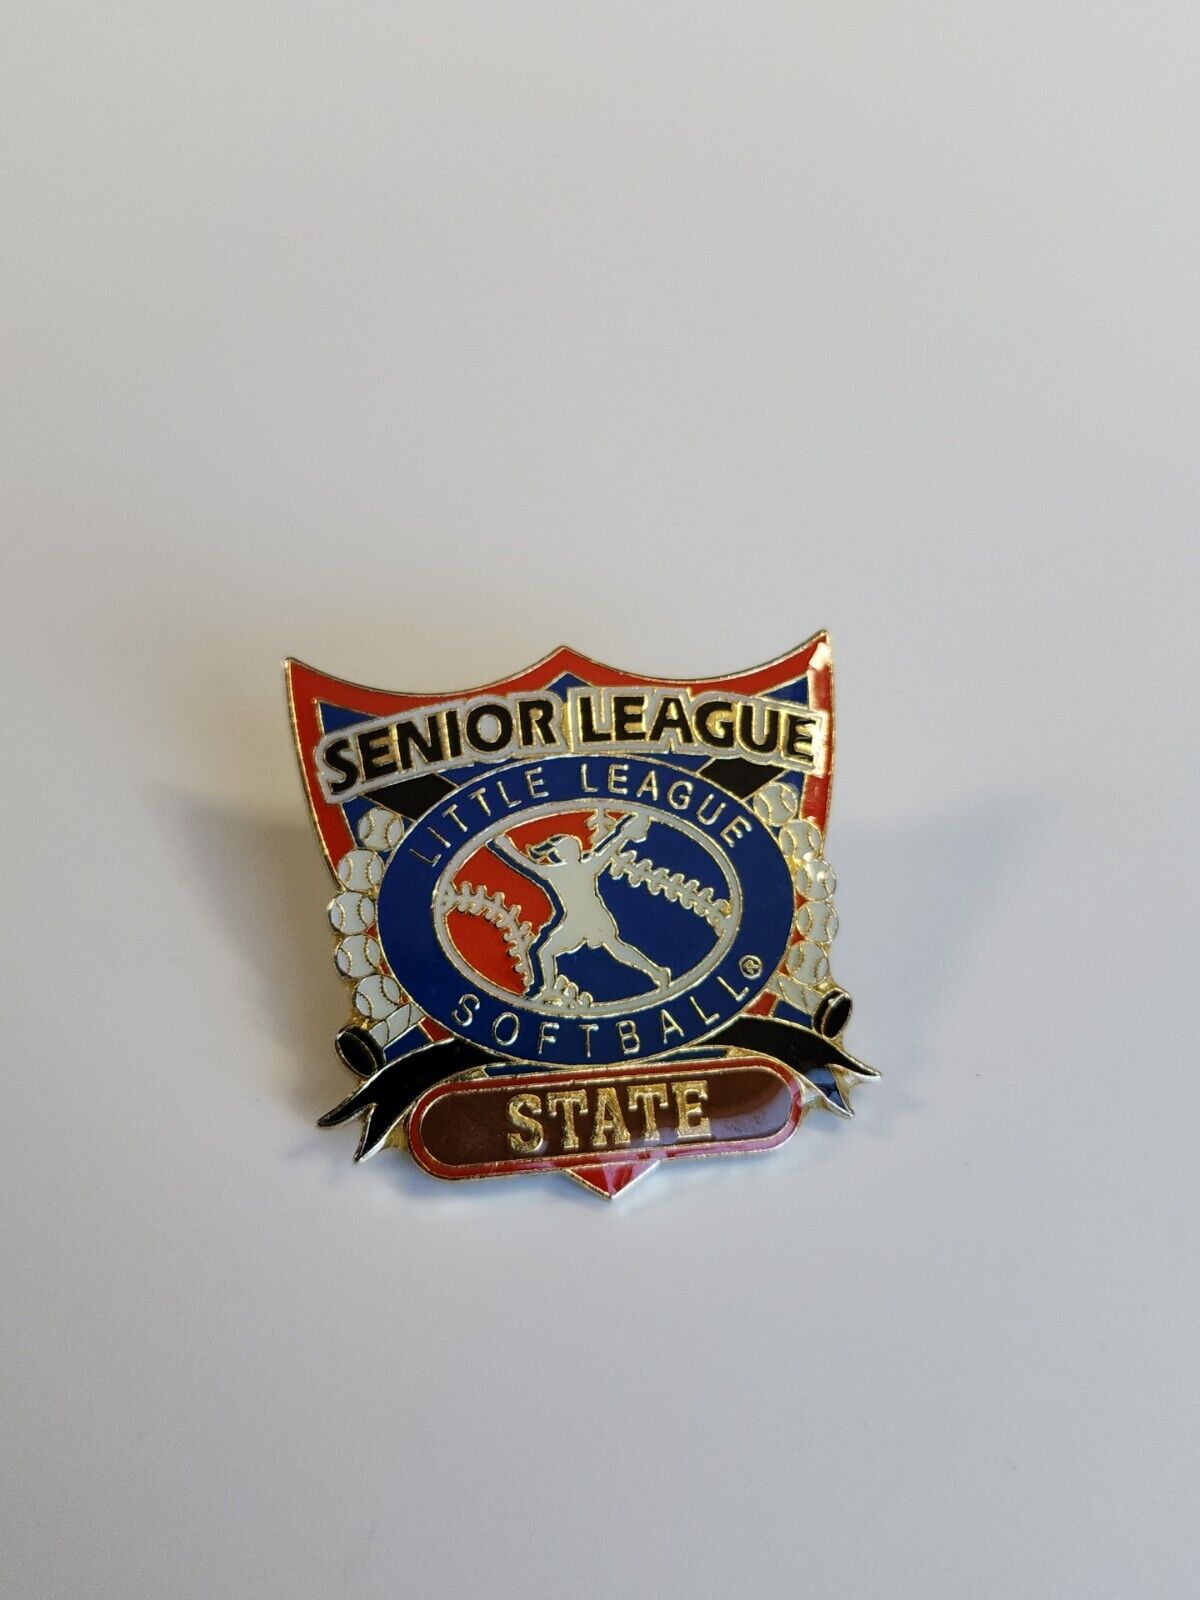 Senior League Little League Softball STATE Lapel Pin 